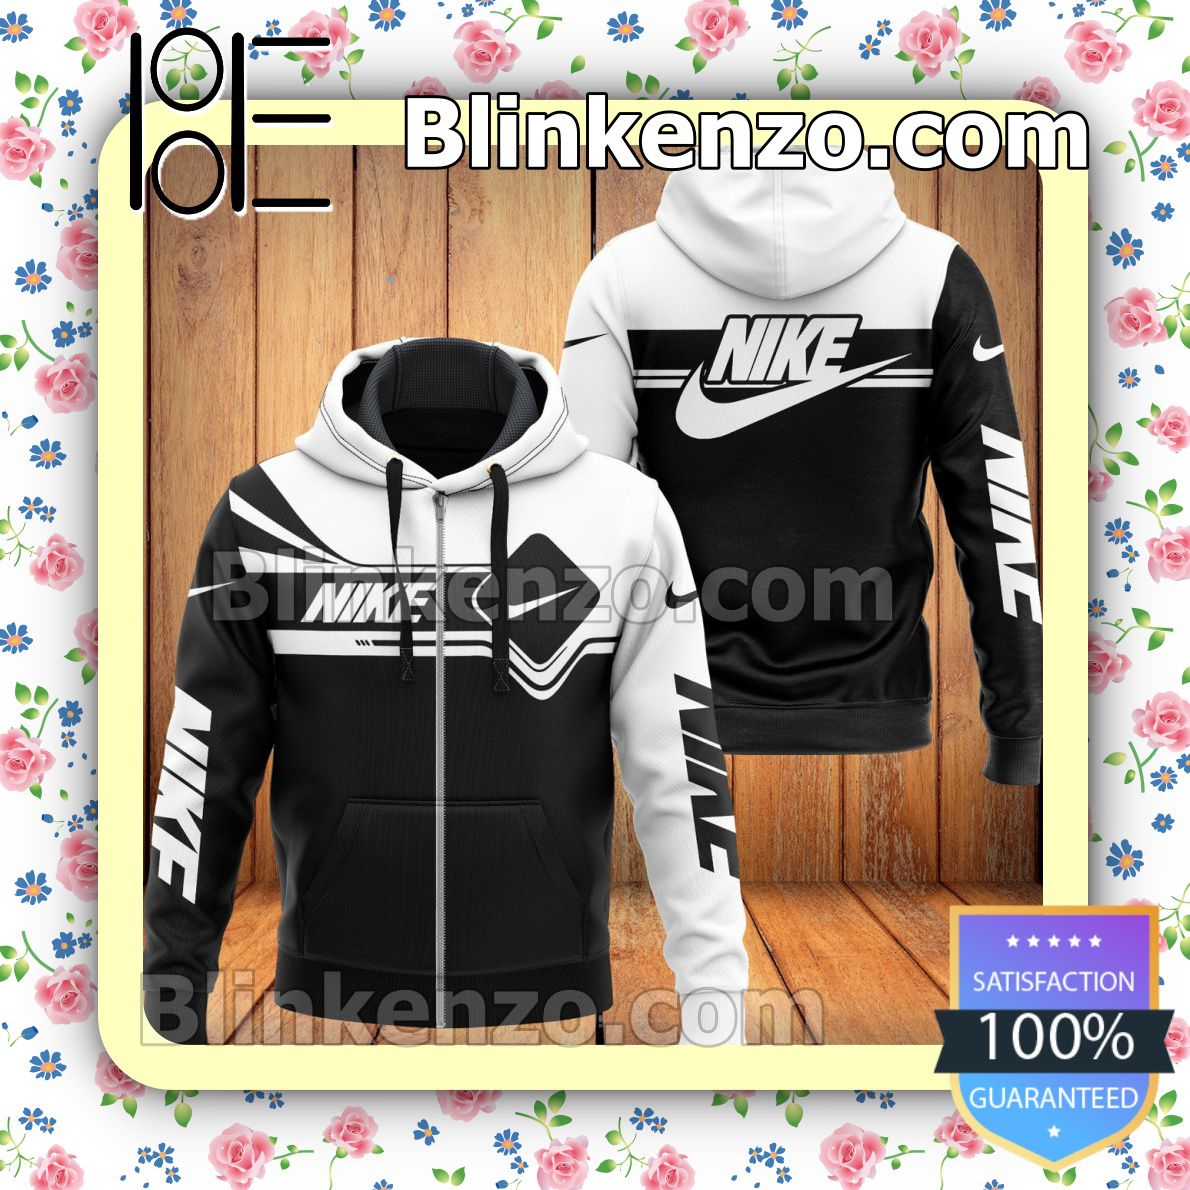 Great Quality Nike Brand Logo Black Mix White Full-Zip Hooded Fleece Sweatshirt